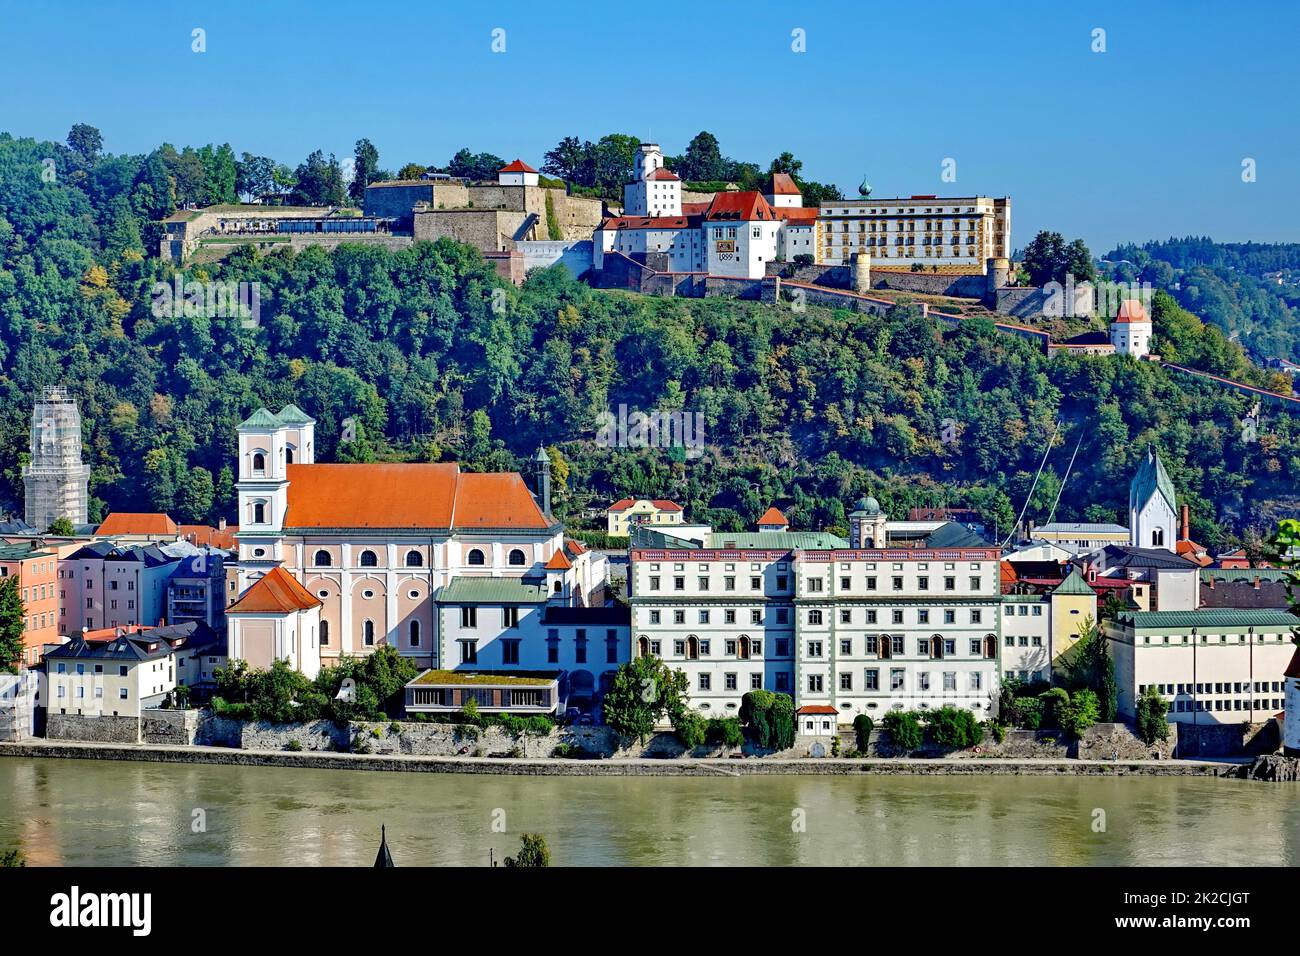 Bavaria, Lower Bavaria, Passau, City of three rivers, Veste Oberhaus, Jesuit Church St. Michael, Danube, geography, tourism Stock Photo